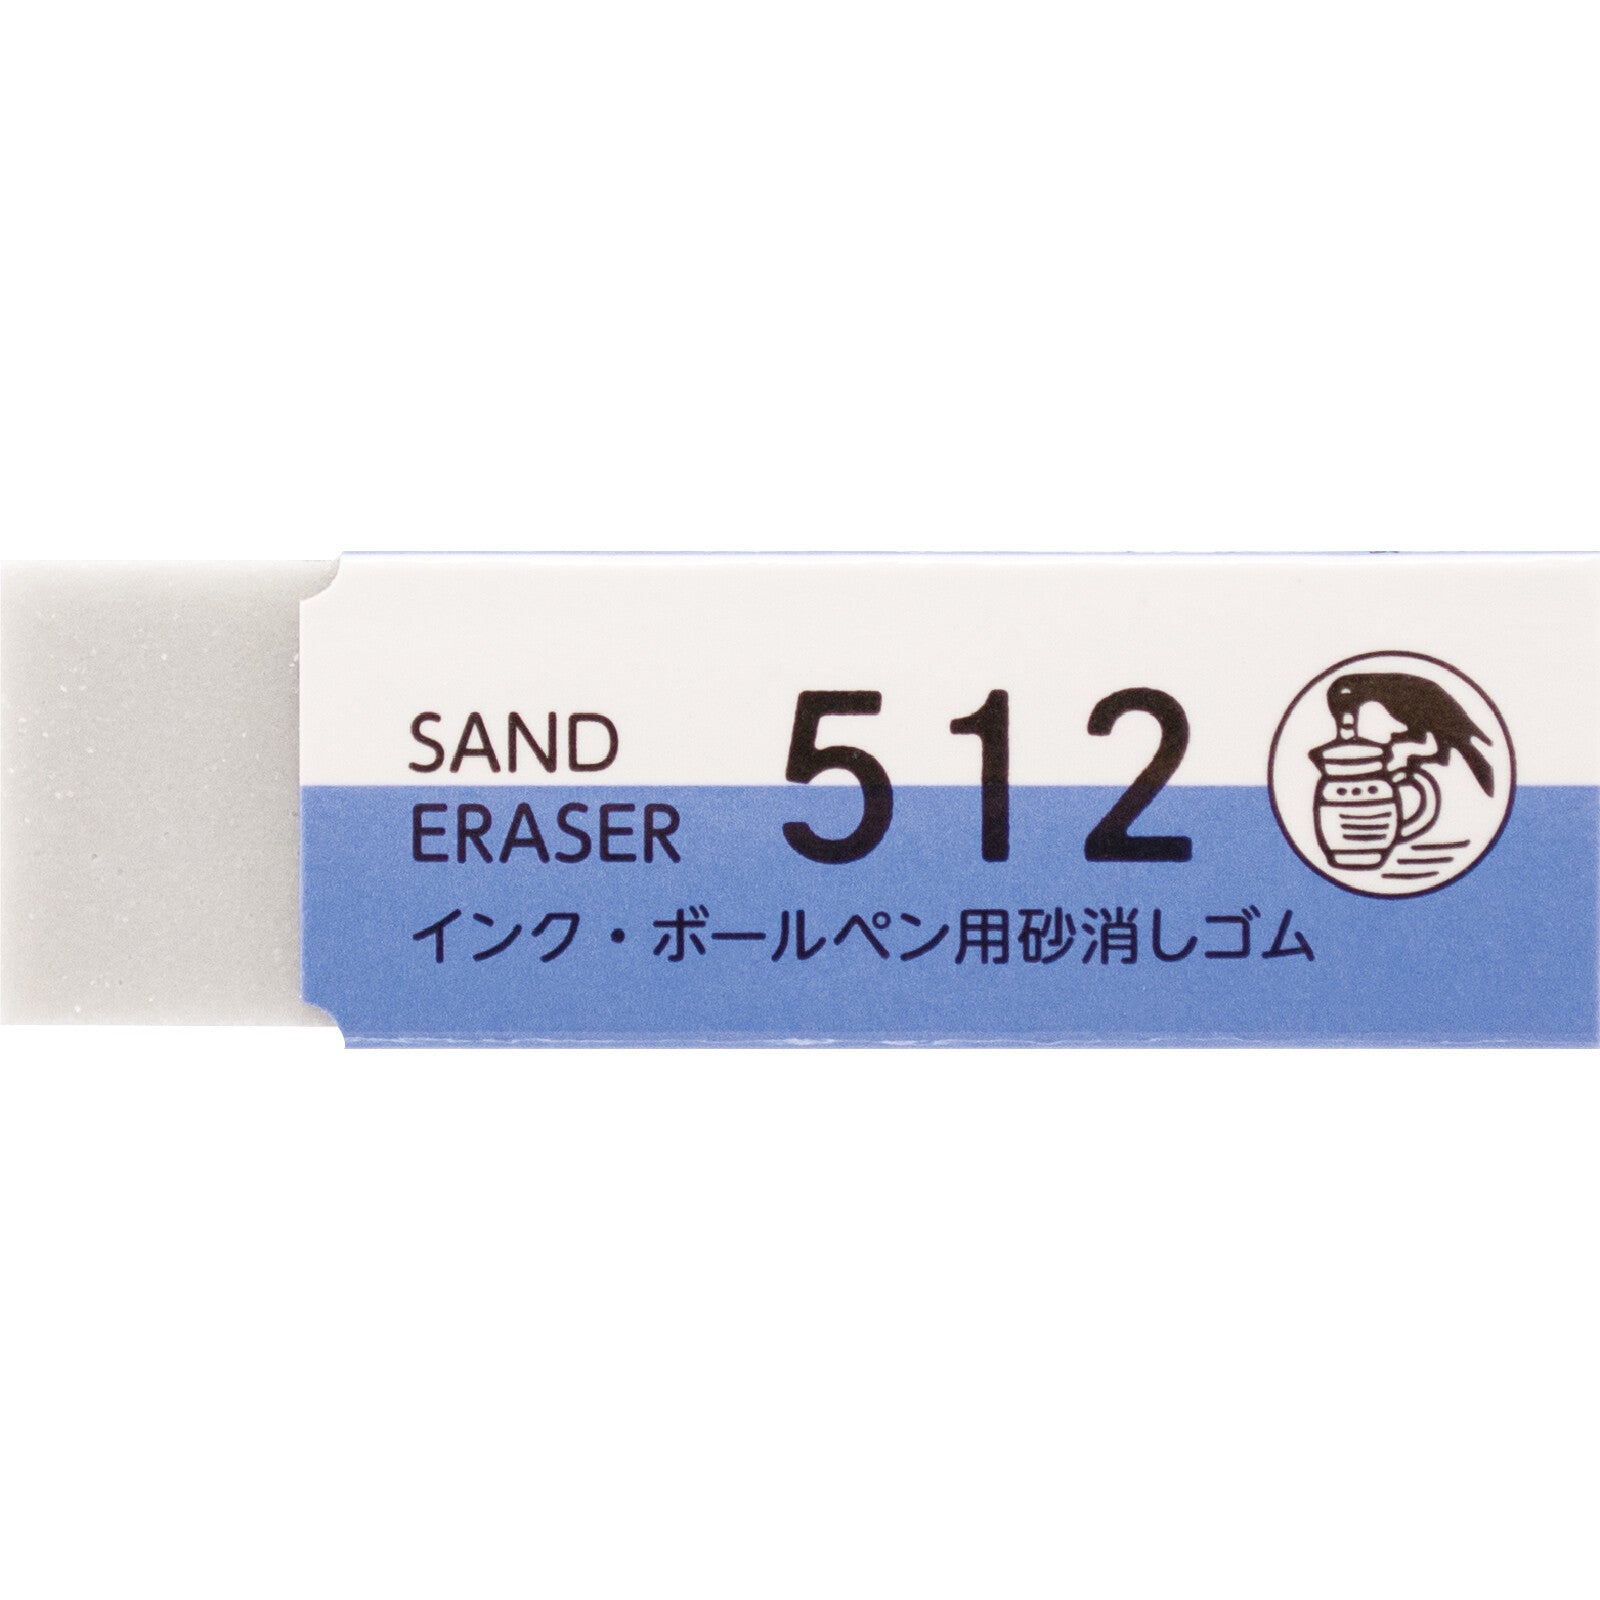 Seed Kneadable Eraser